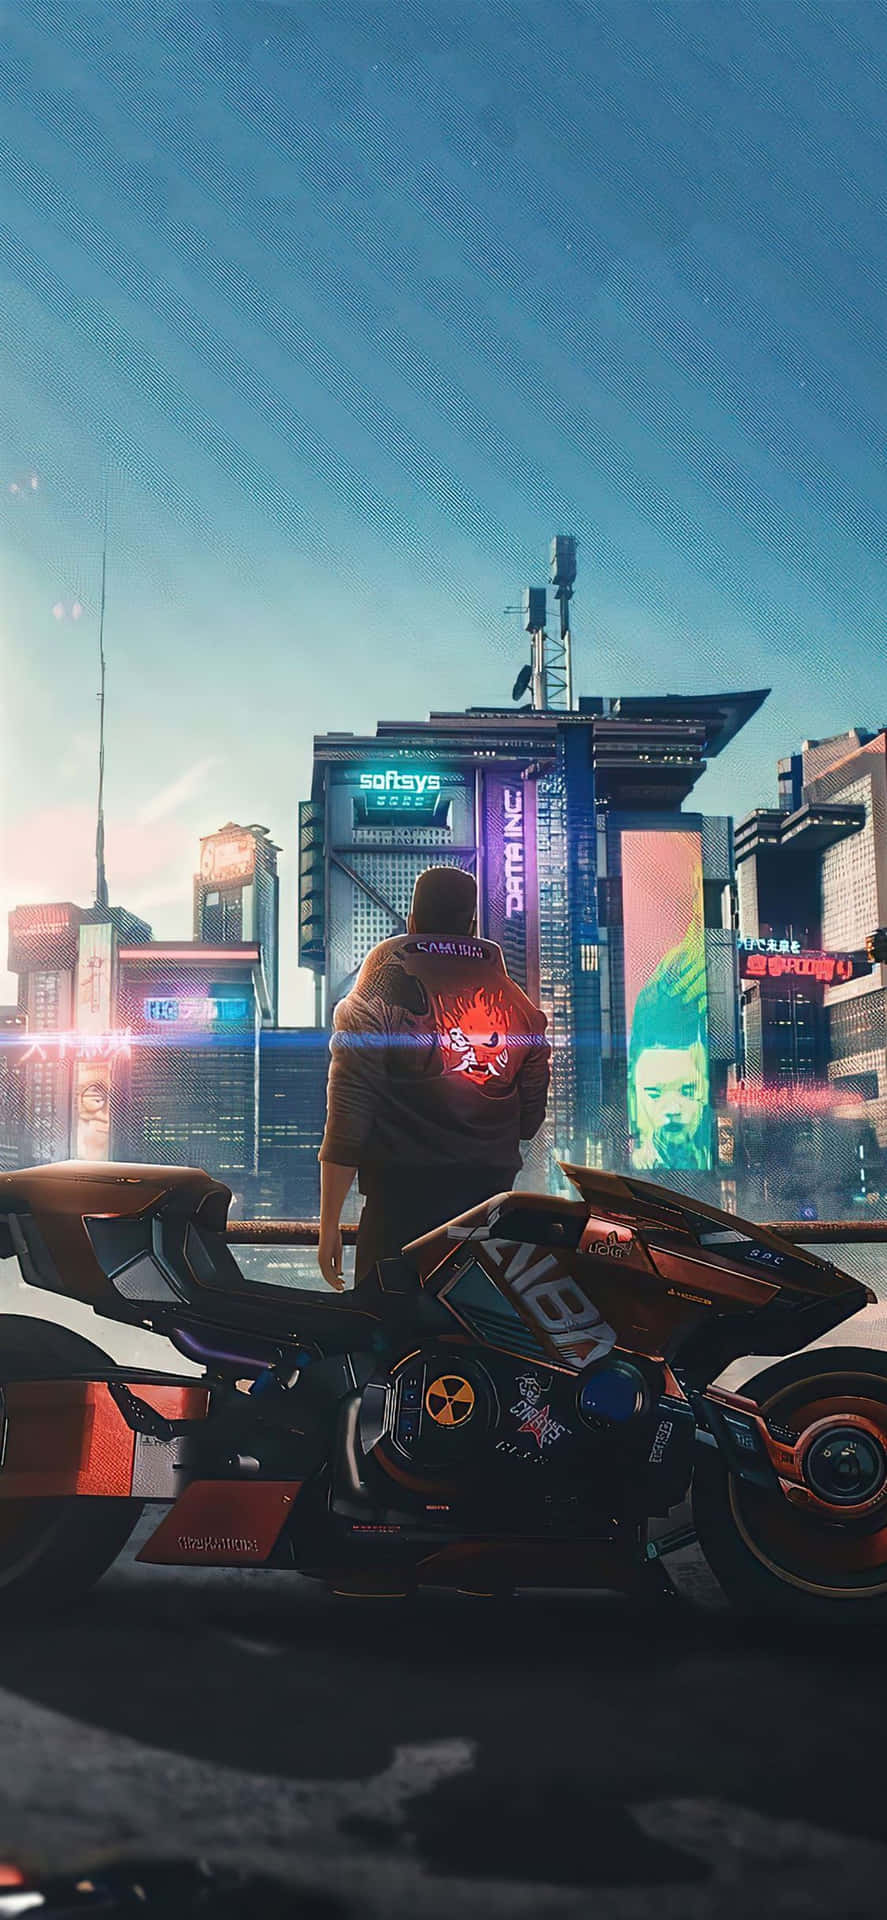 Iphone X Cyberpunk 2077 Baggrund Mand Med En Motorcykel